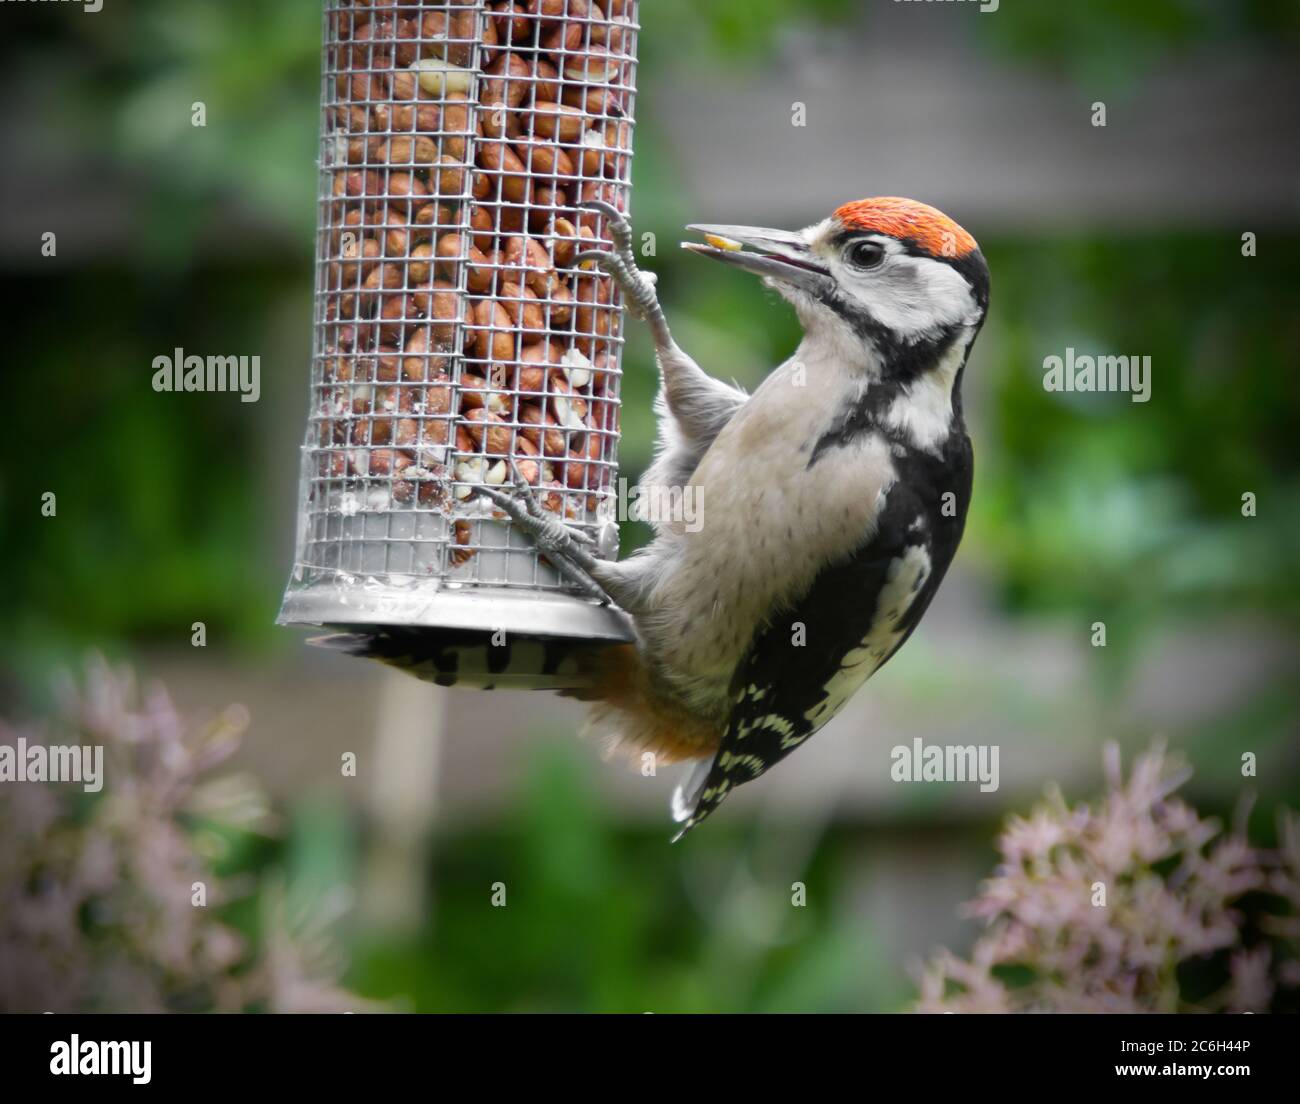 Woodpecker on a mesh feeder Stock Photo